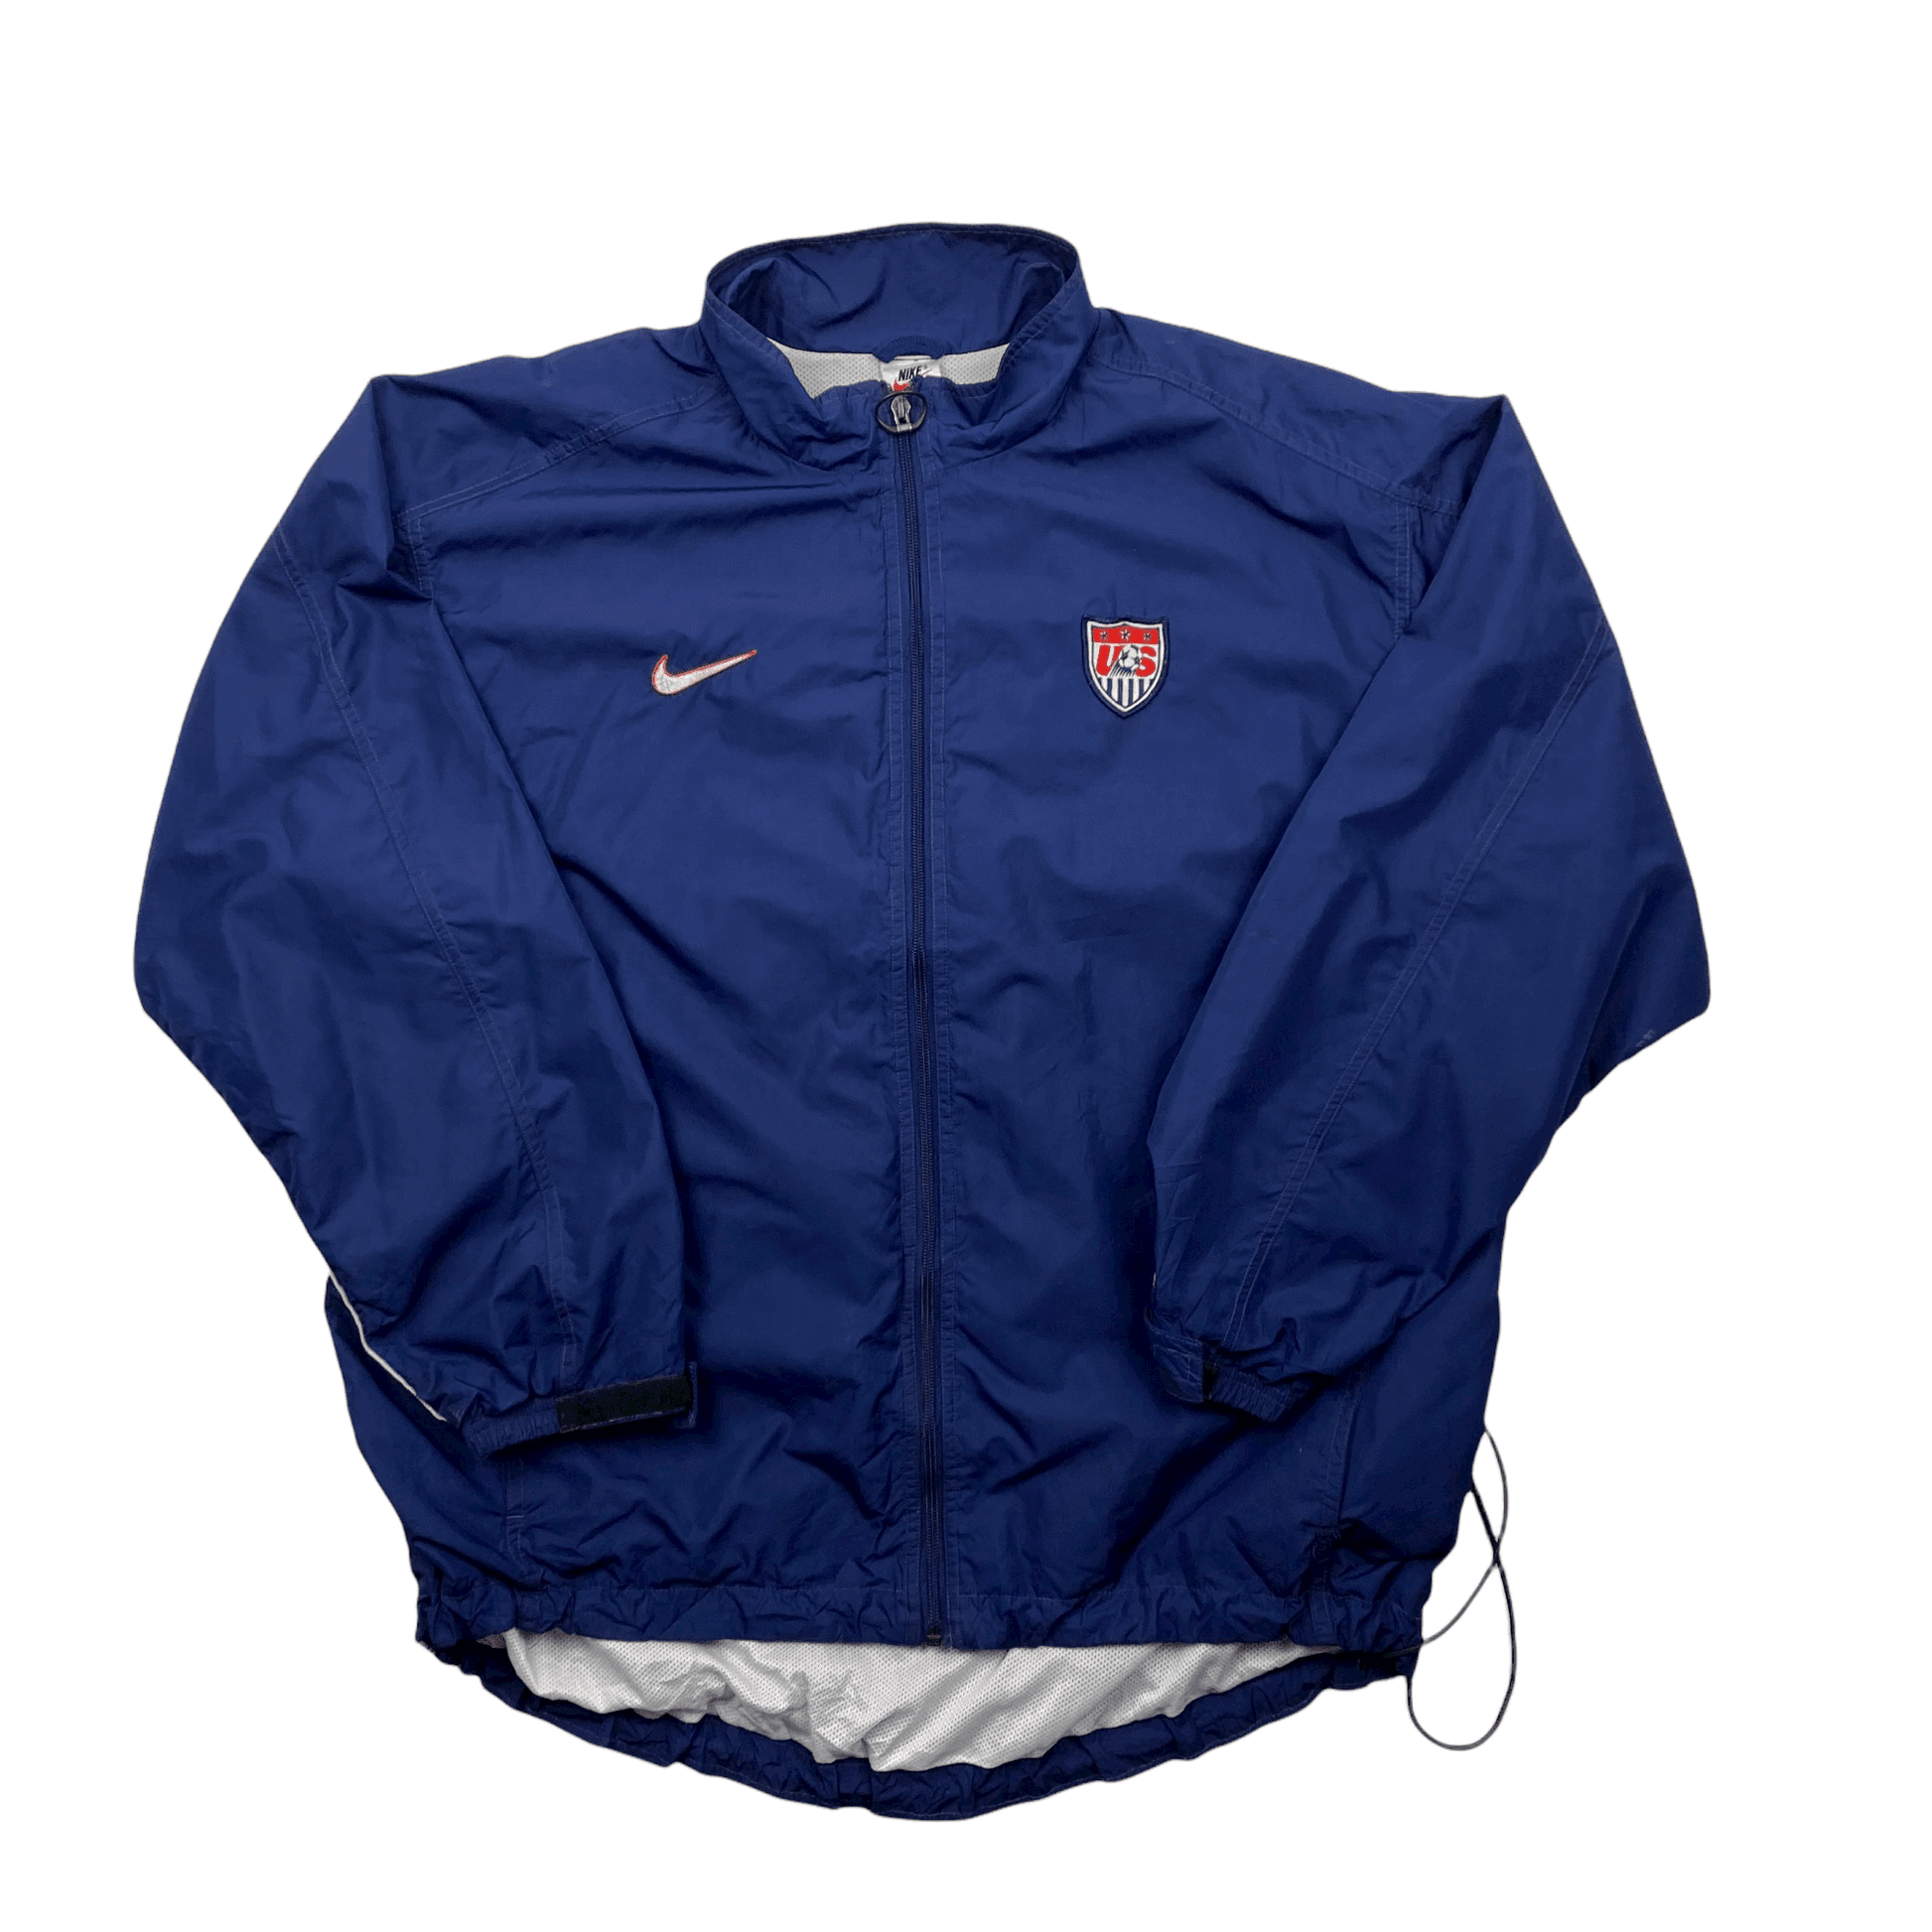 Vintage 90s Navy Blue Nike USA Football Windbreaker Jacket - Extra Large - The Streetwear Studio